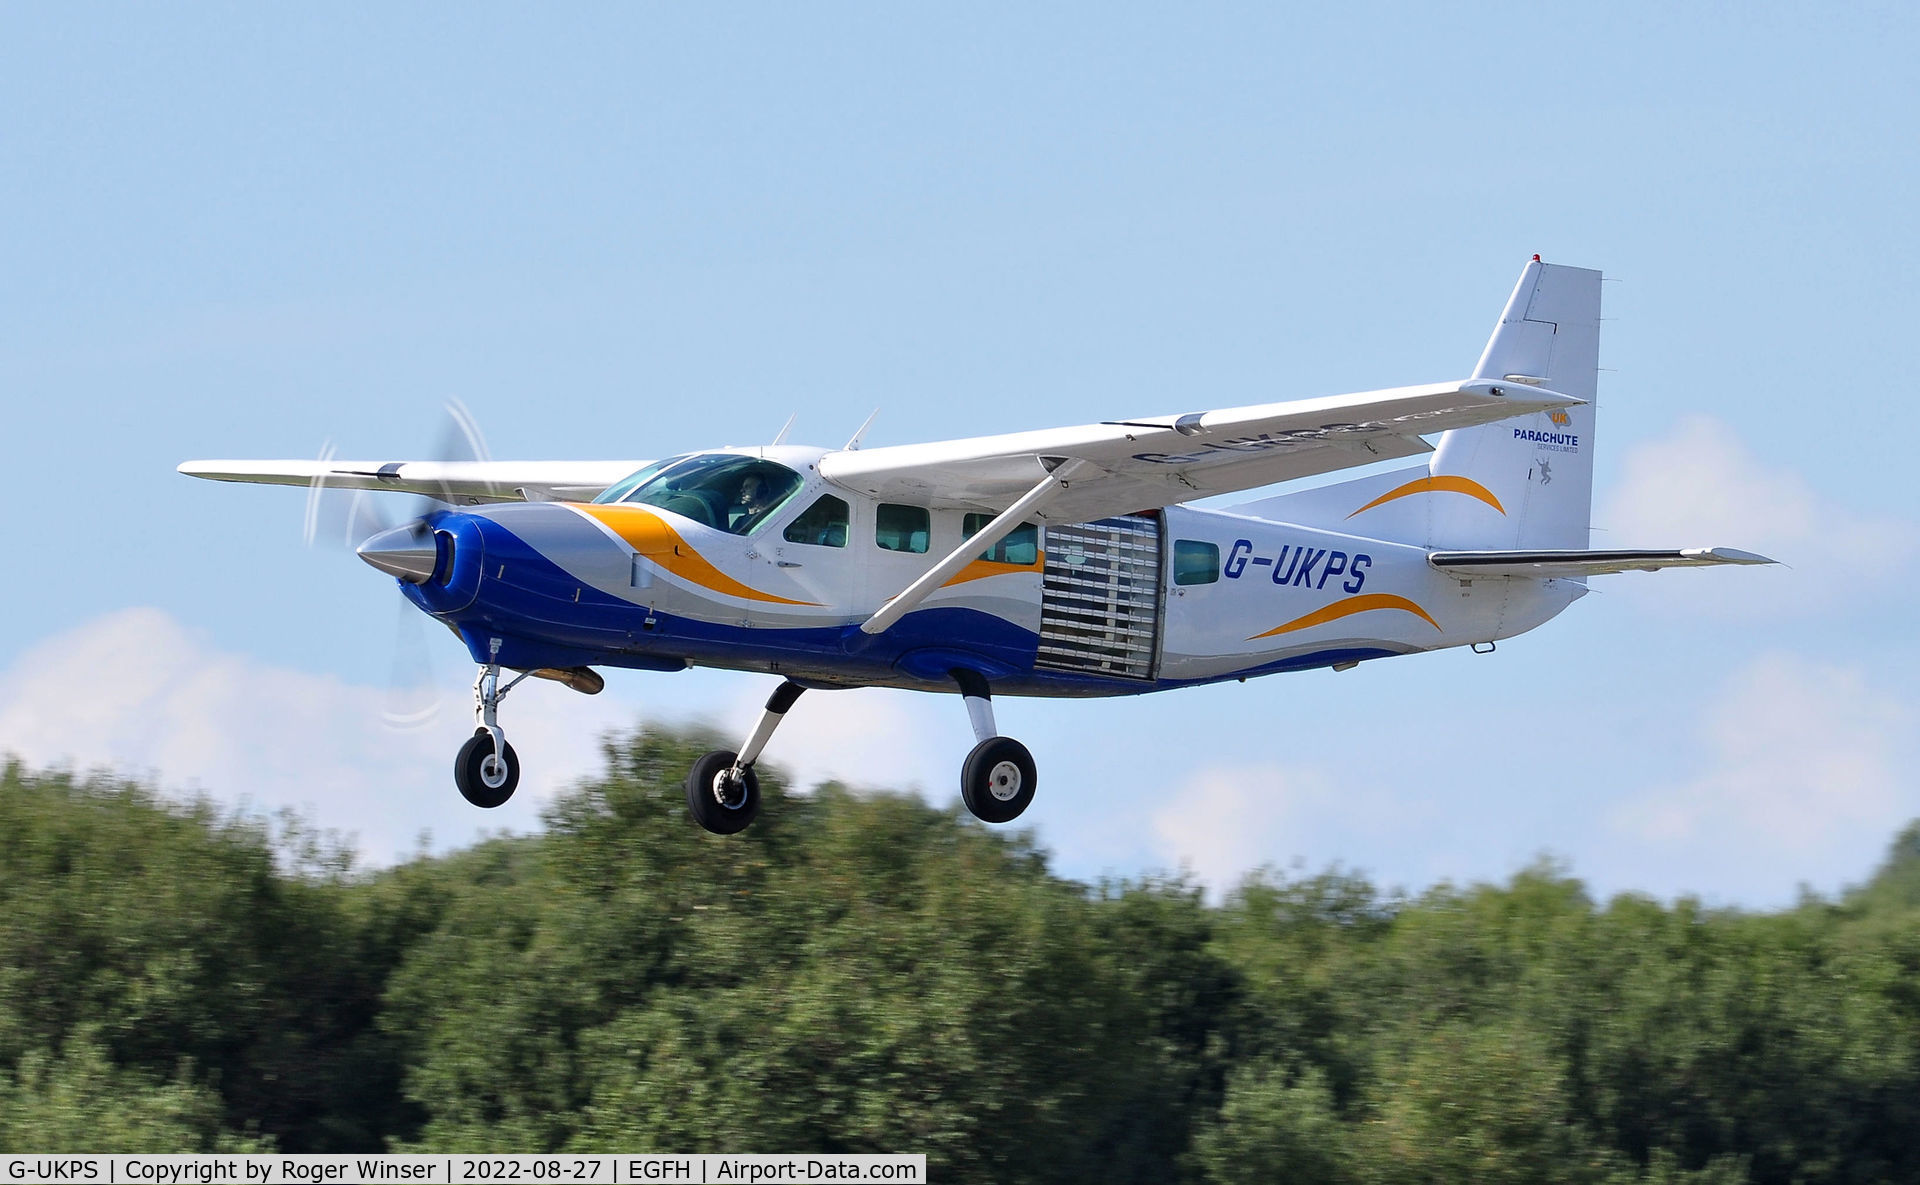 G-UKPS, 2007 Cessna 208 Caravan 1 C/N 20800423, Resident jump-ship for Skydive Swansea.